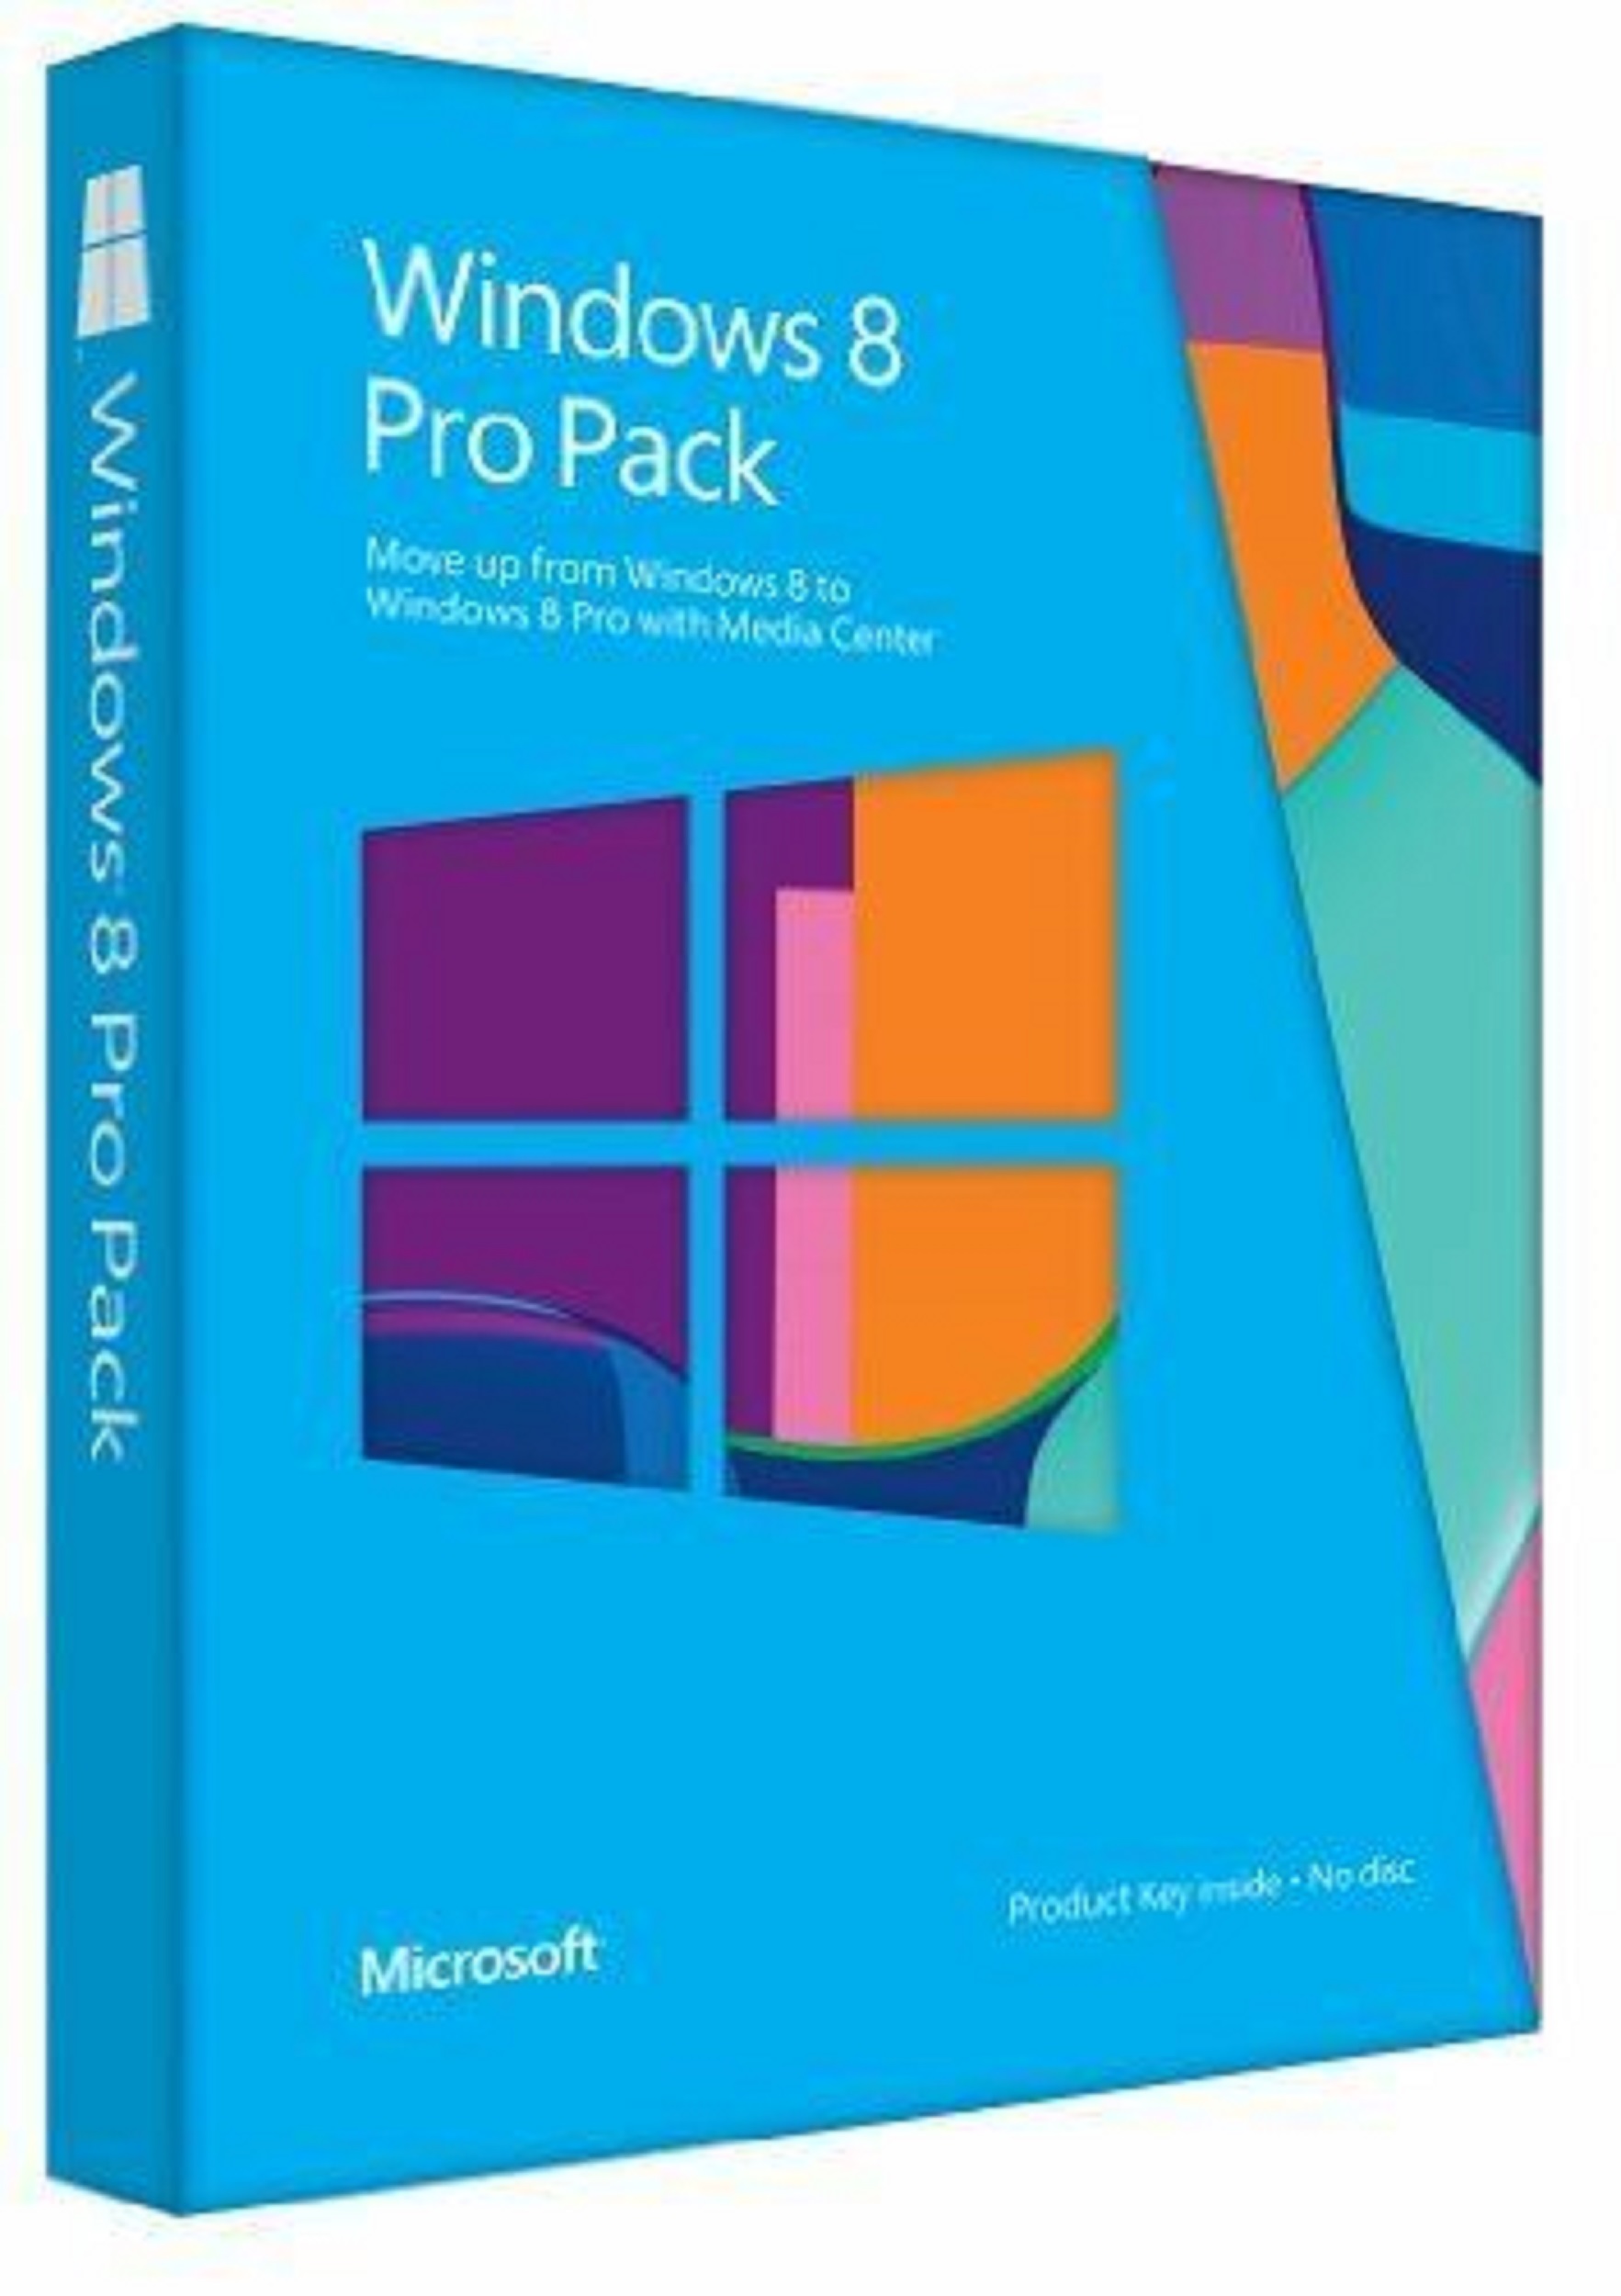 Microsoft Windows 8 Pro Pack (Win 8 to Win 8 Pro Upgrade)